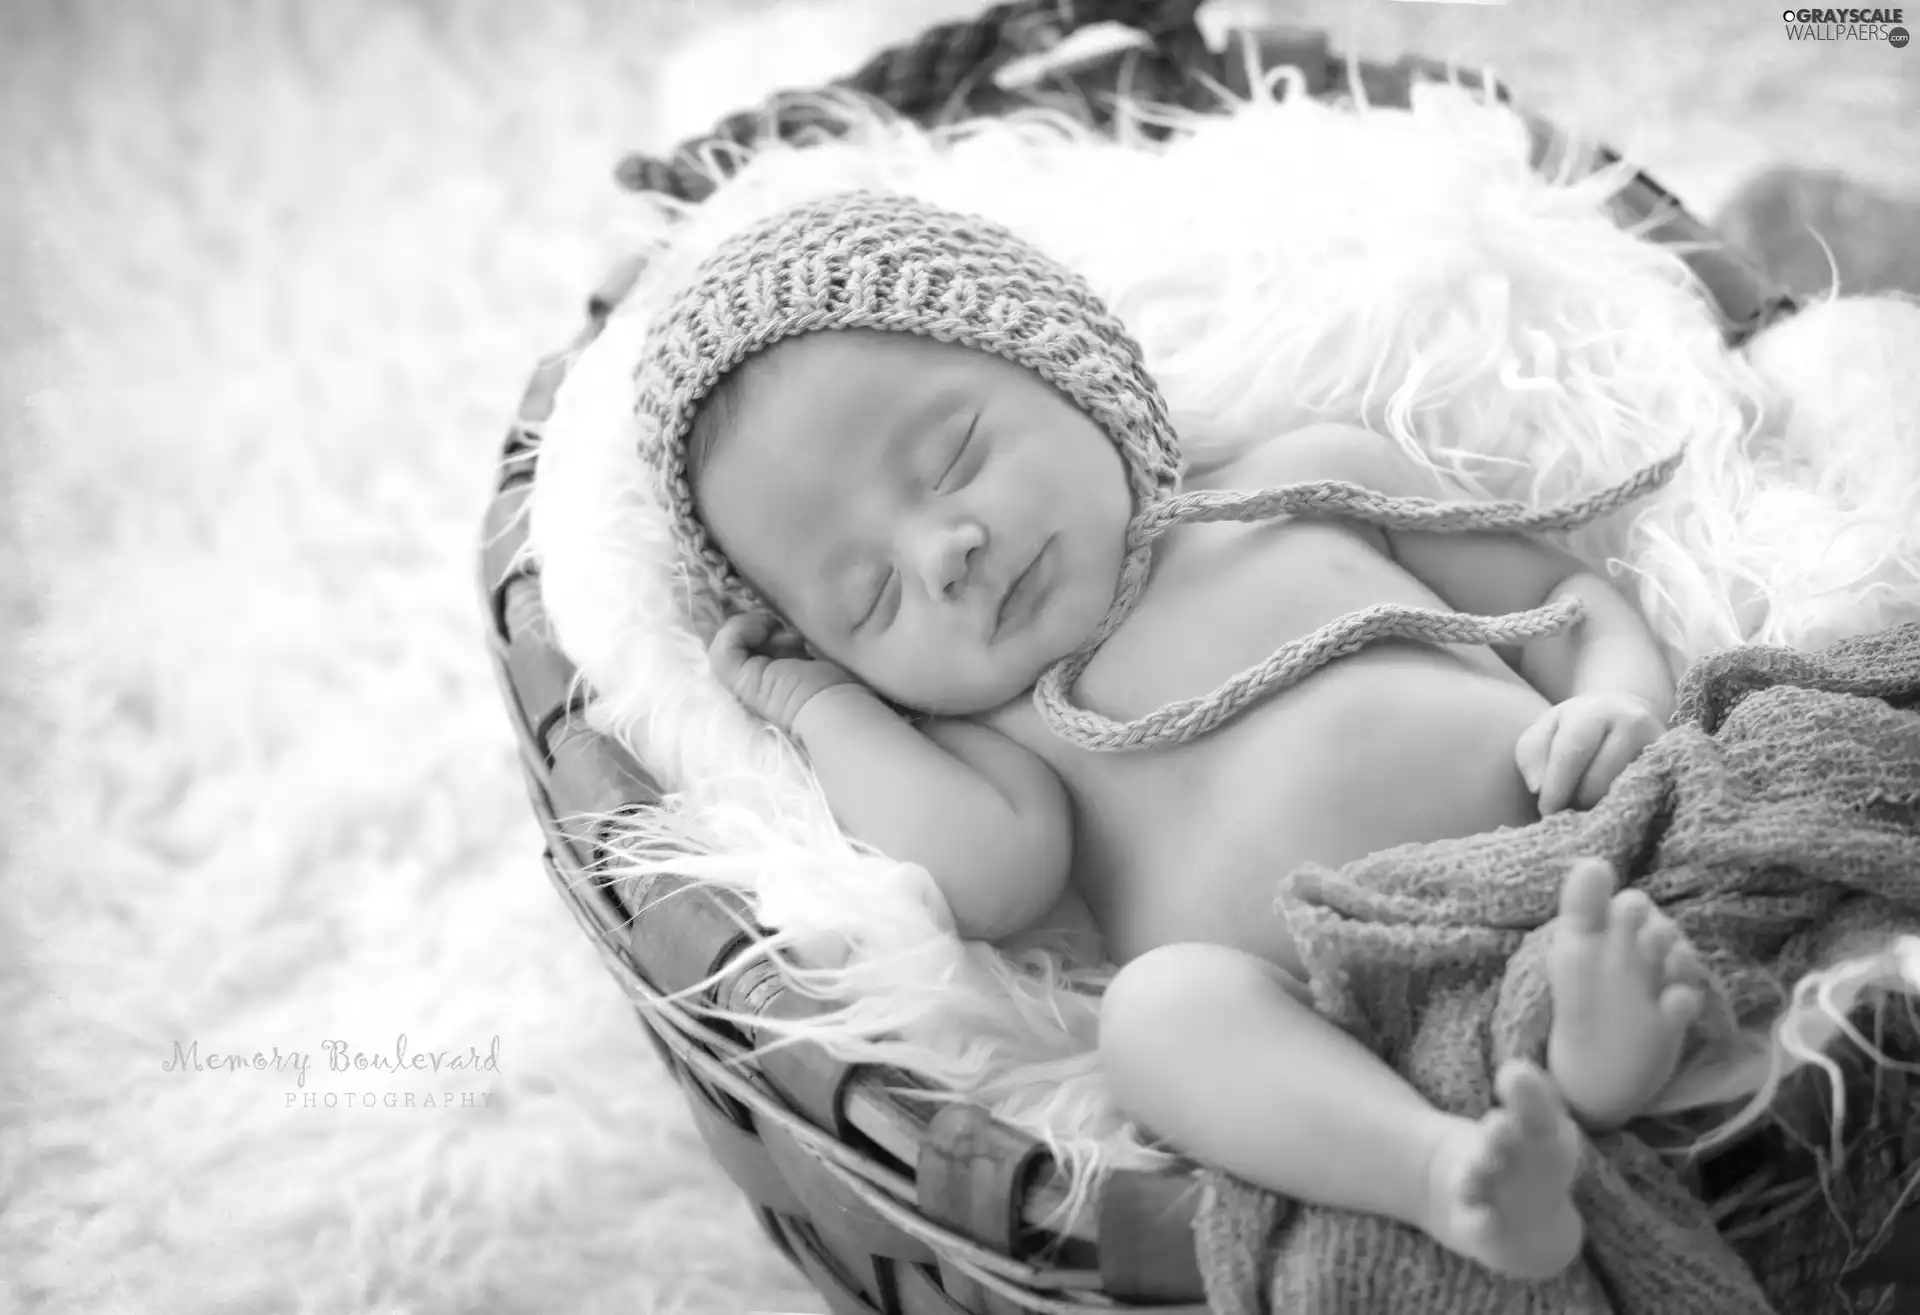 Sleeping, Bonnet, basket, Baby